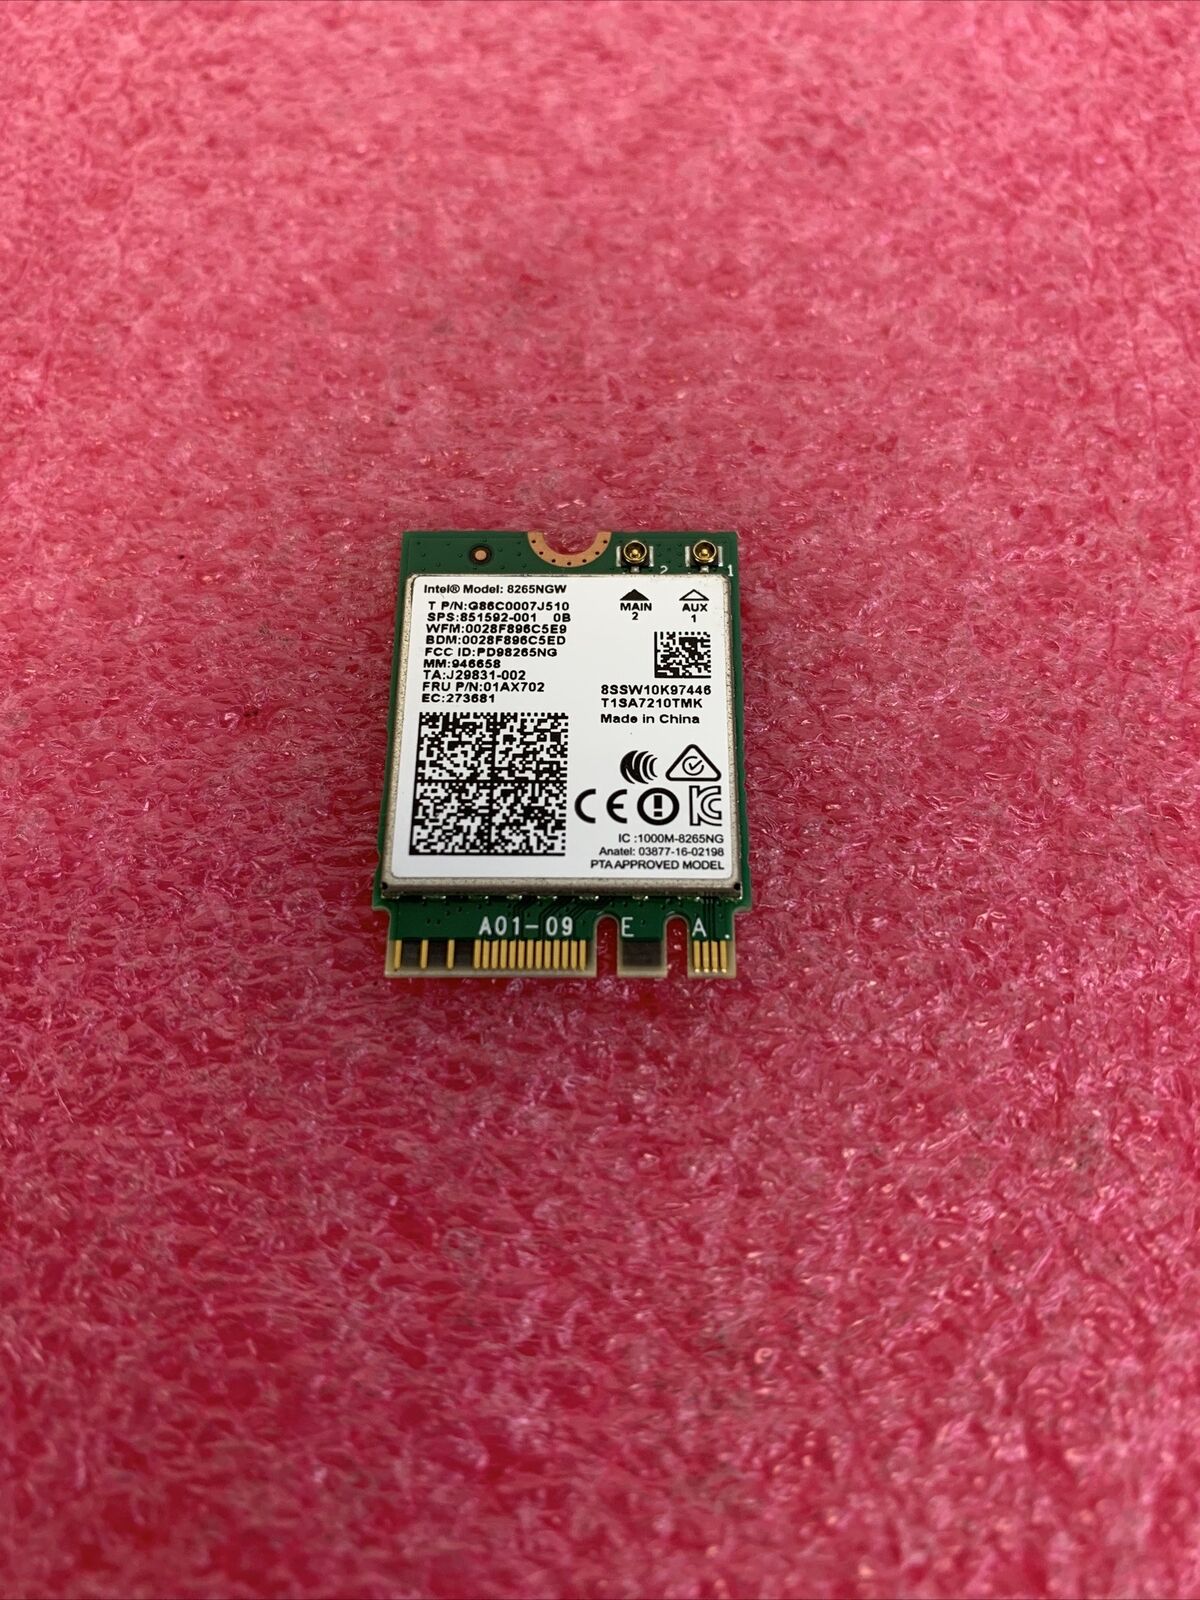 Intel 8265NGW Dual Band Wireless-AC Bluetooth WiFi M.2 Card